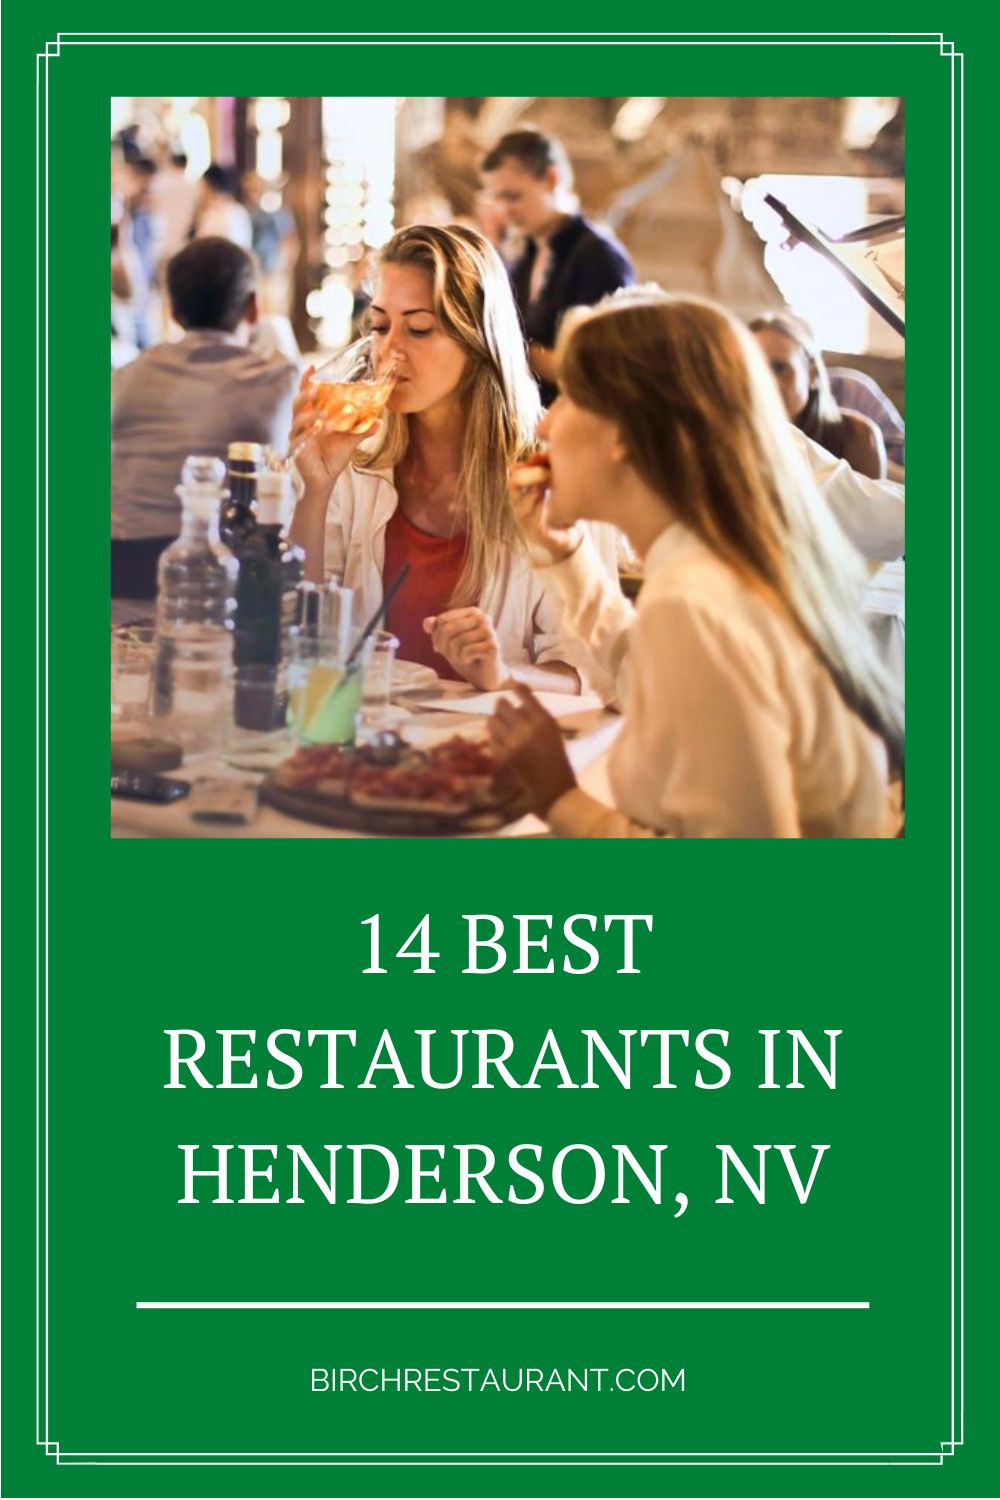 Best Restaurants in Henderson